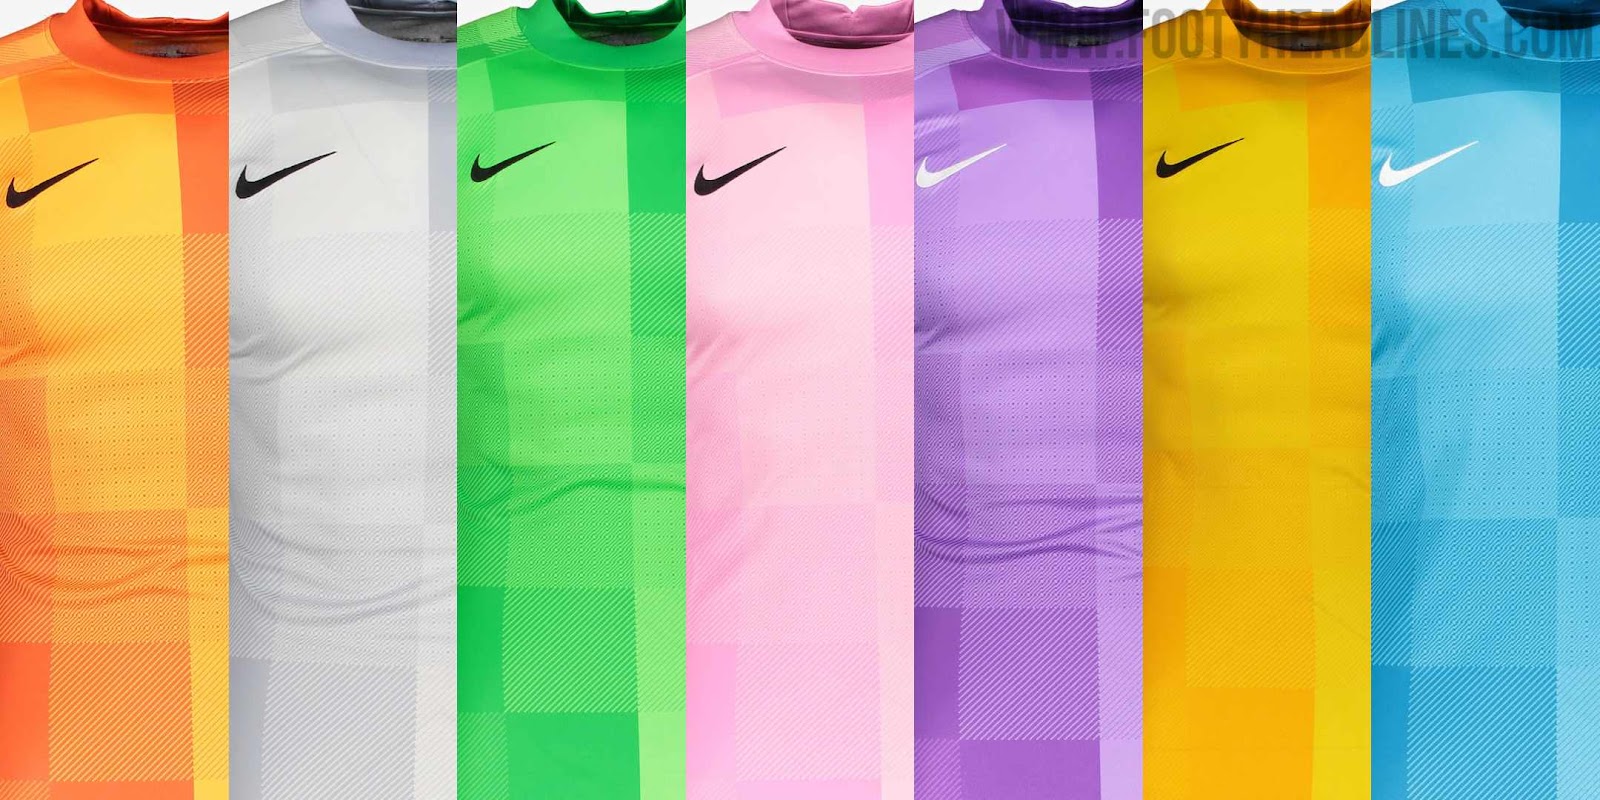 Nike 21-22 Promo Goalkeeper Kit Leaked - Footy Headlines